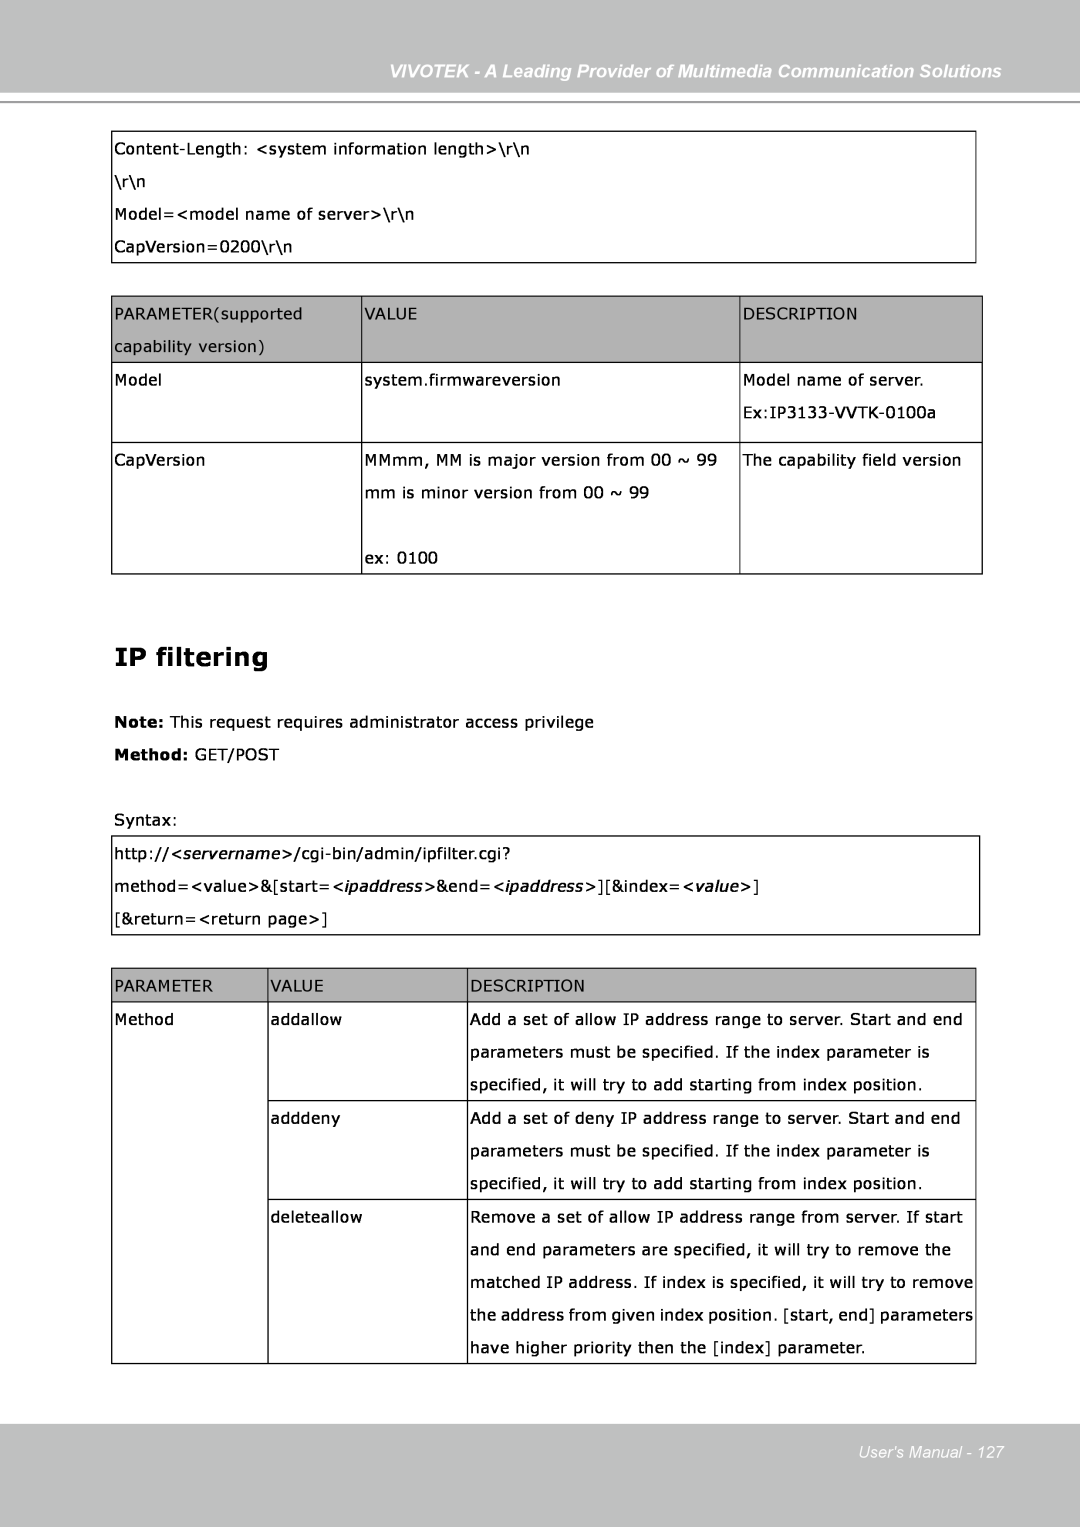 Vivotek FD7141(V) manual IP filtering, Method: GET/POST, Users Manual 